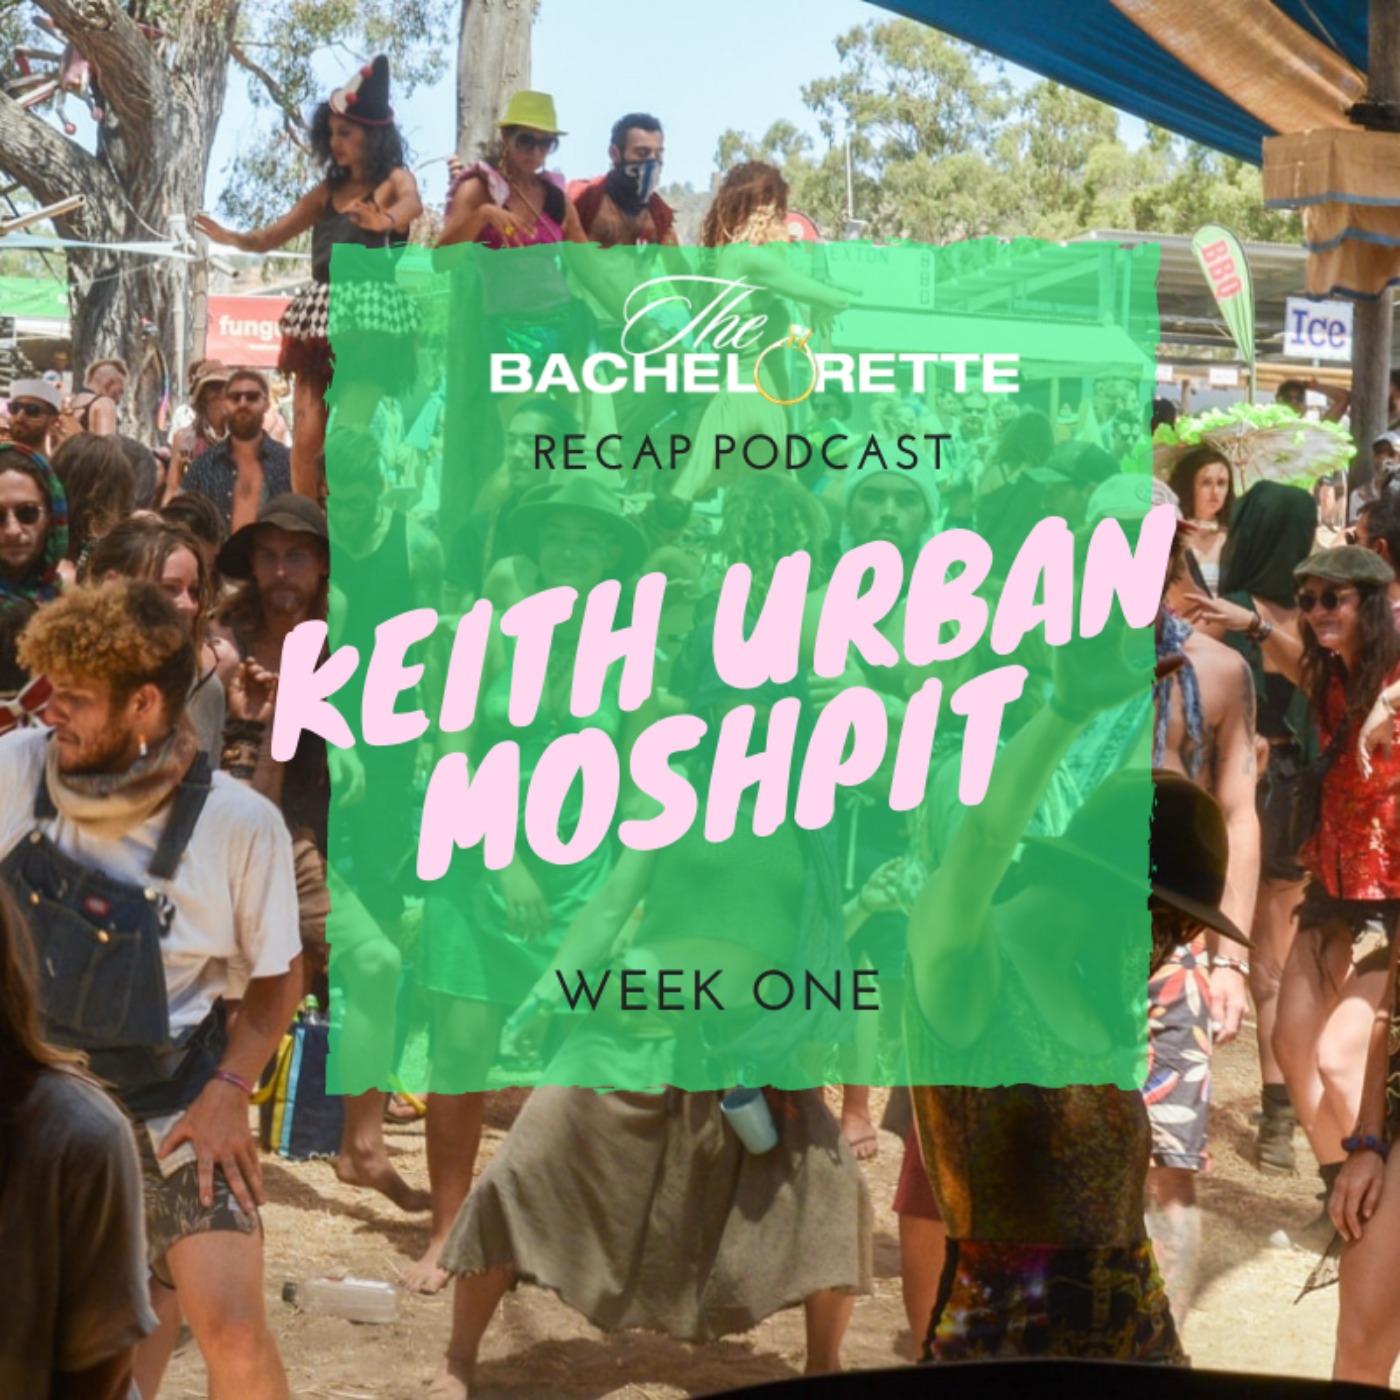 THE BACHELORETTE Week One: Keith Urban Moshpit